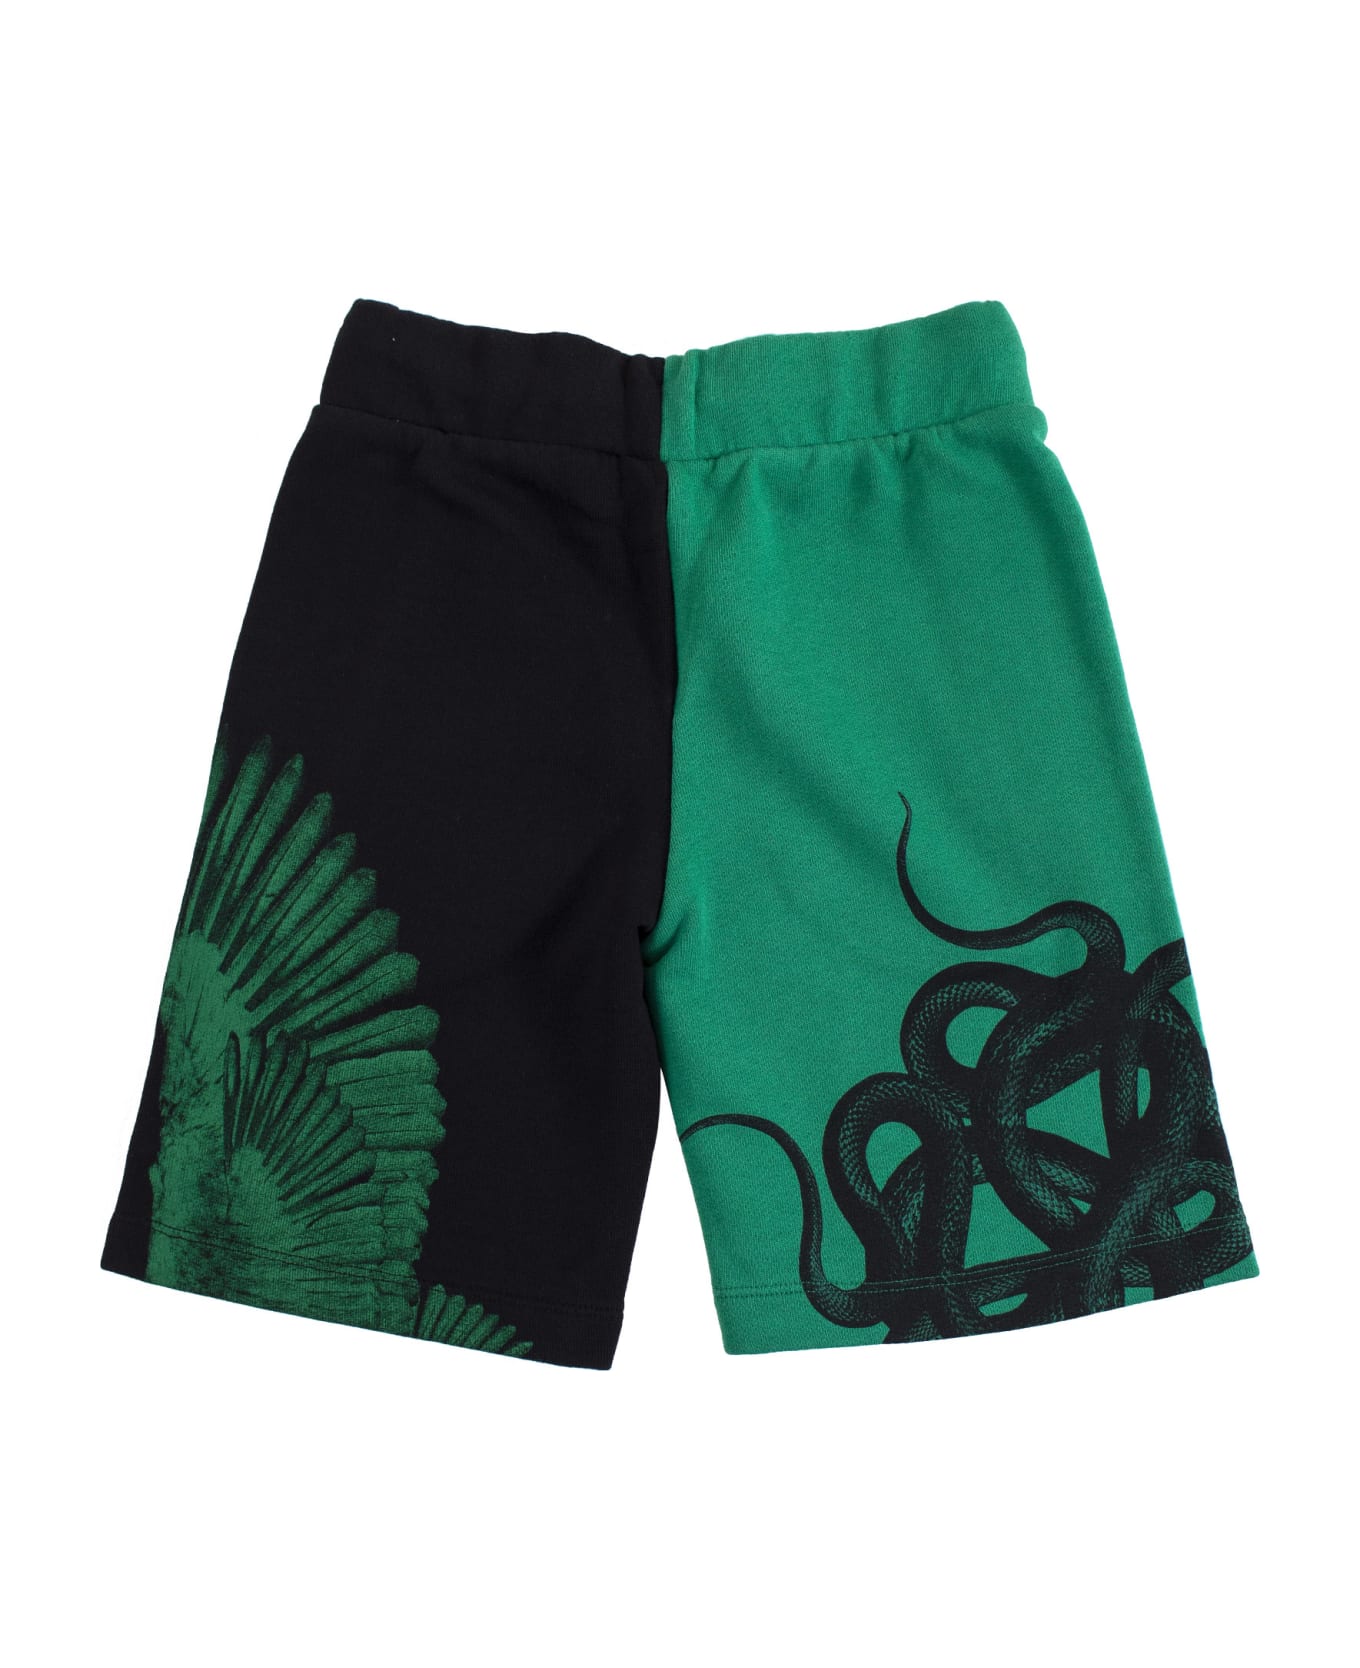 Marcelo Burlon Printed Shorts - Black/Green